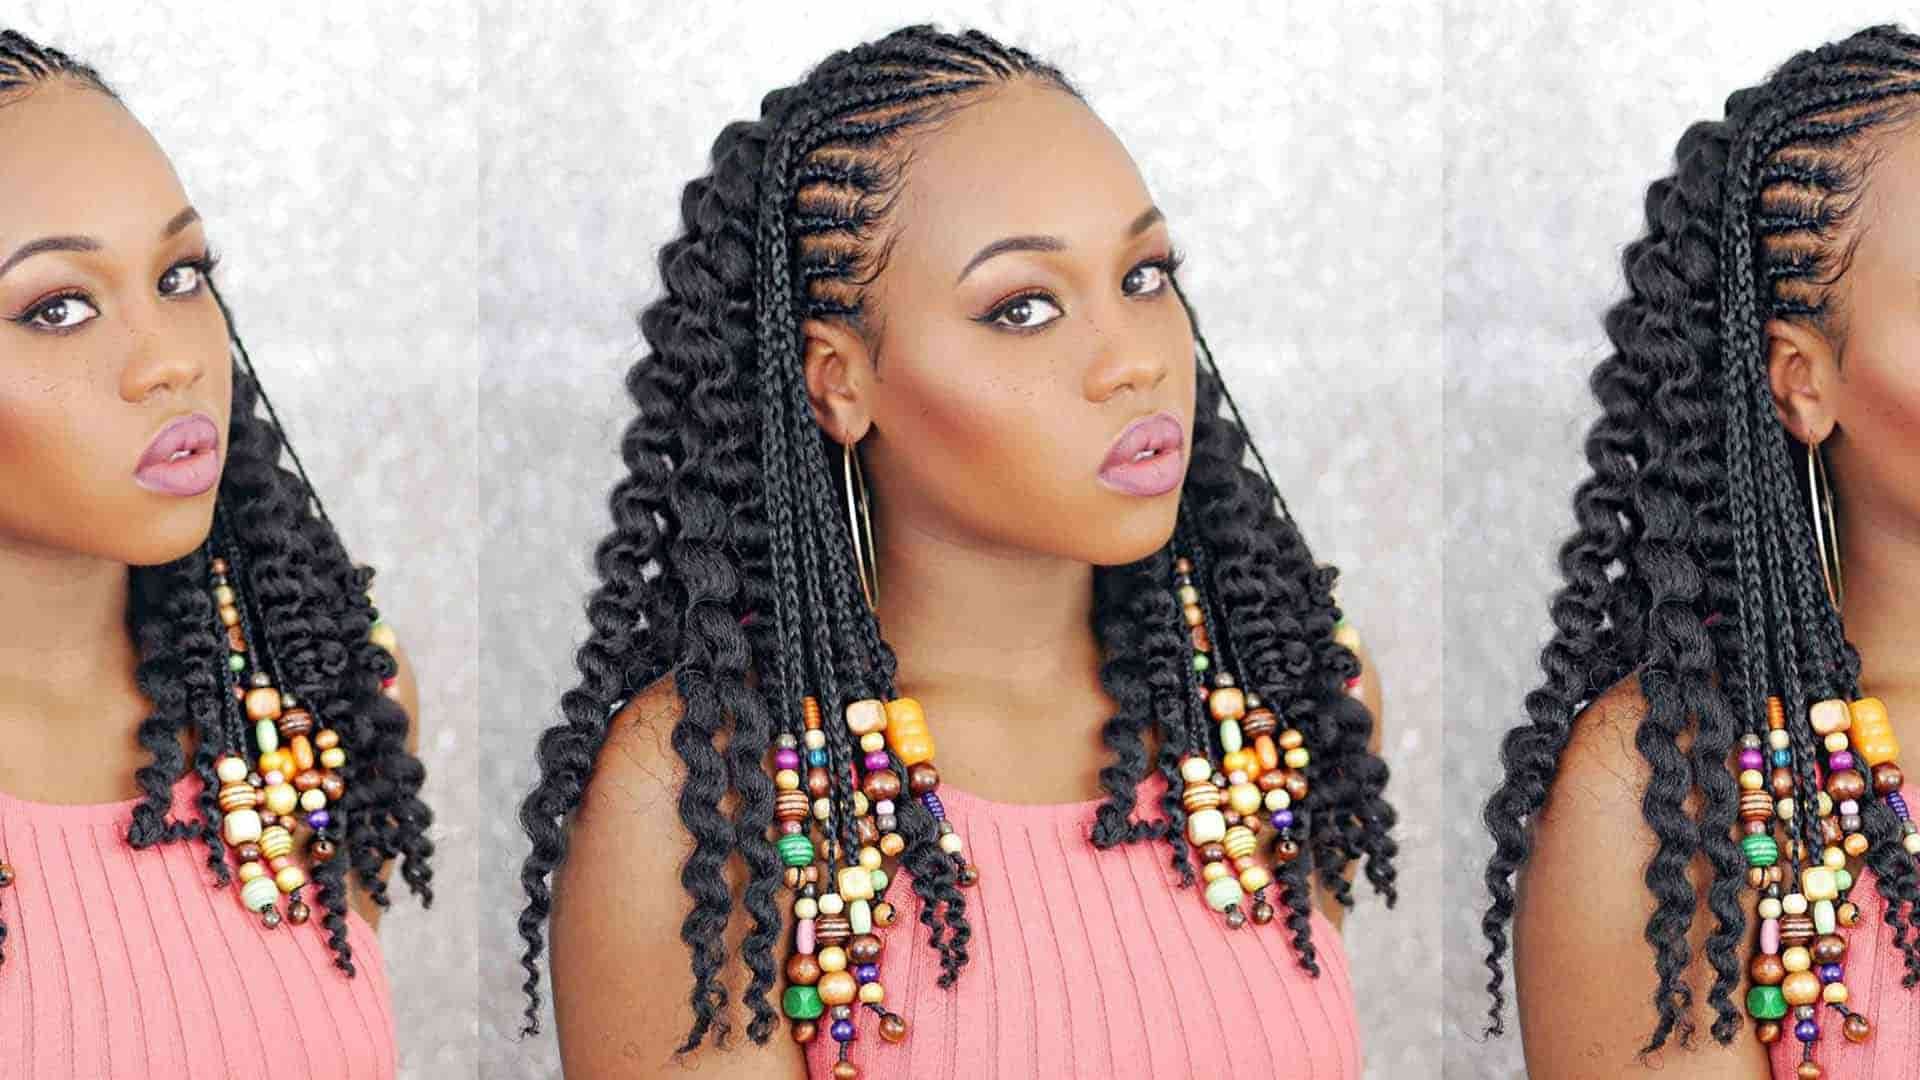 100 Black Hair Ideas for AfricanAmerican Women